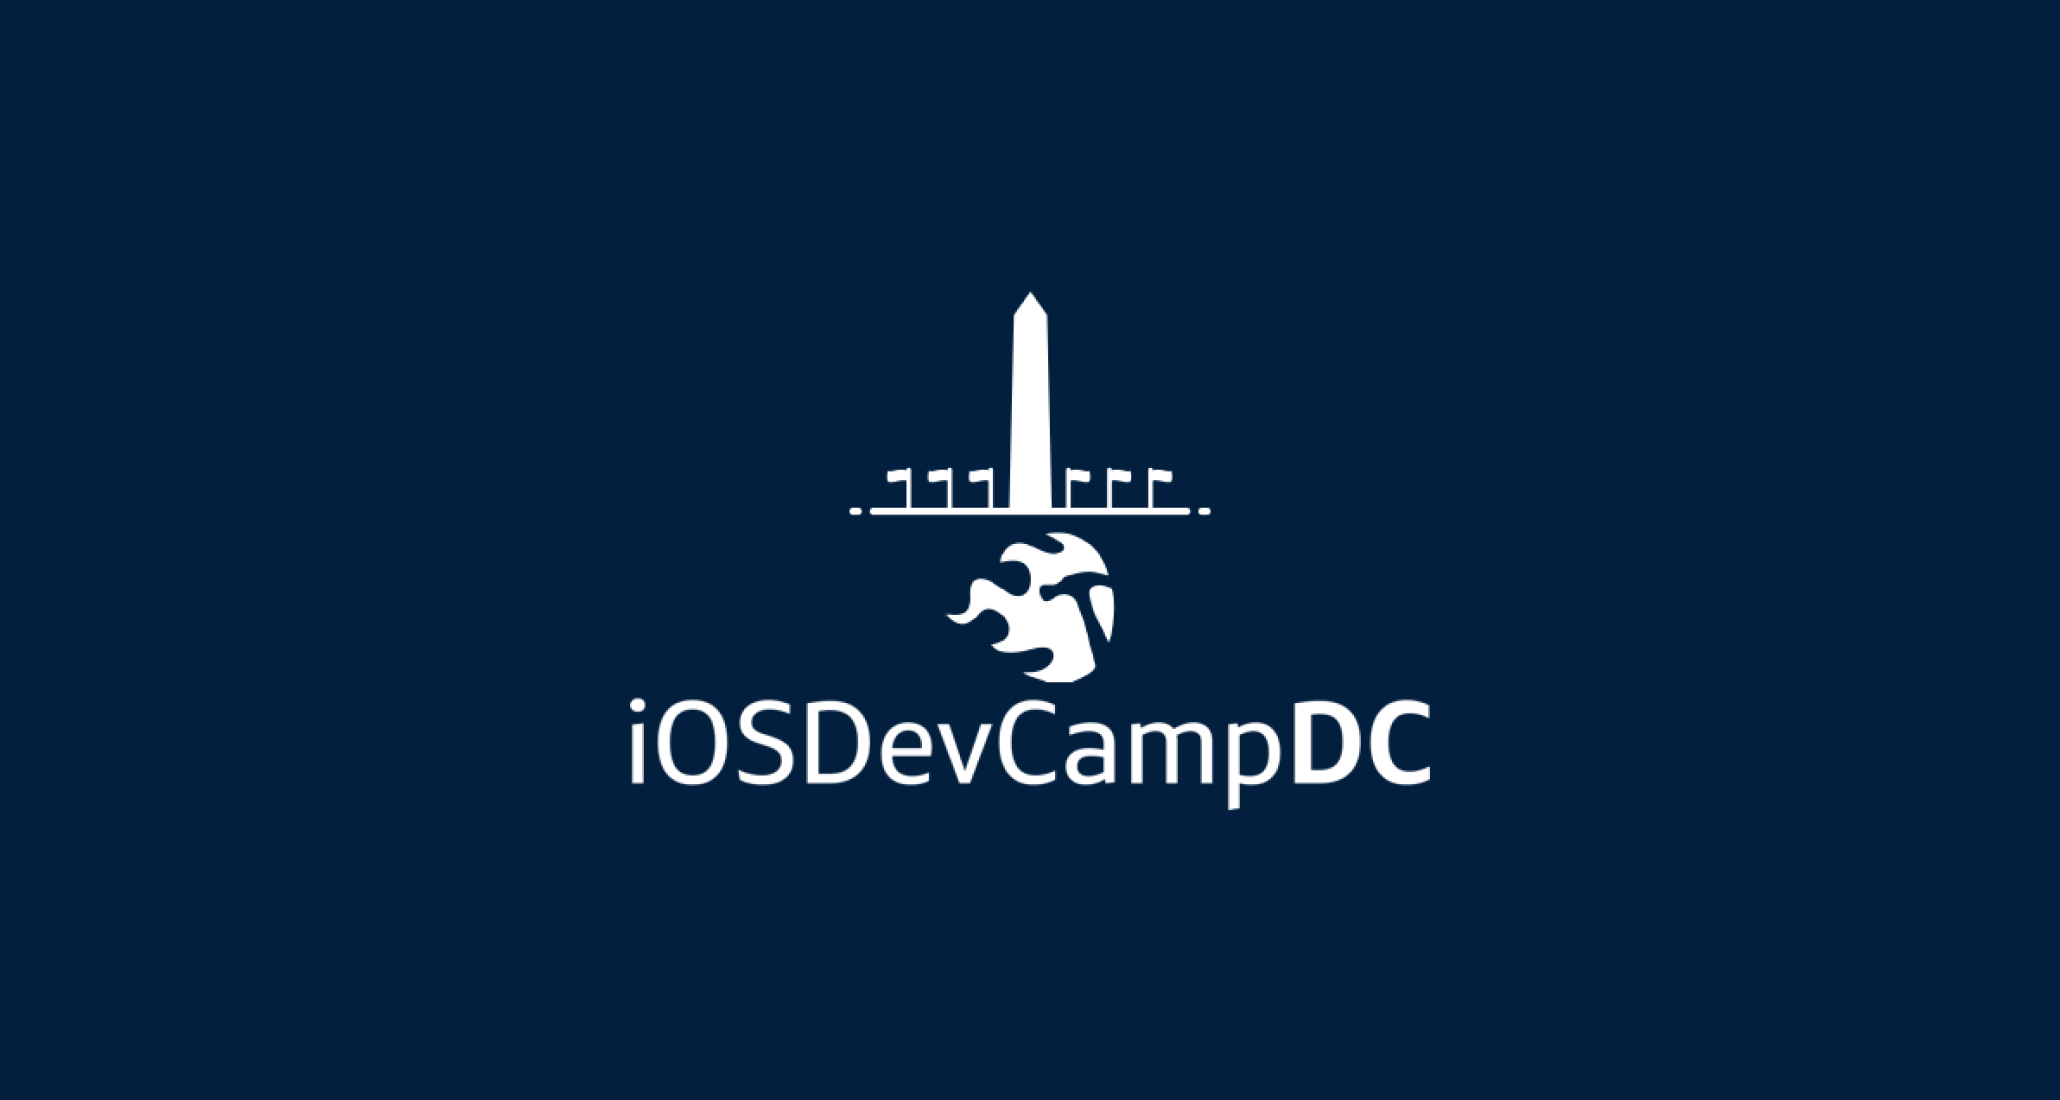 iOSDevCamp DC logo